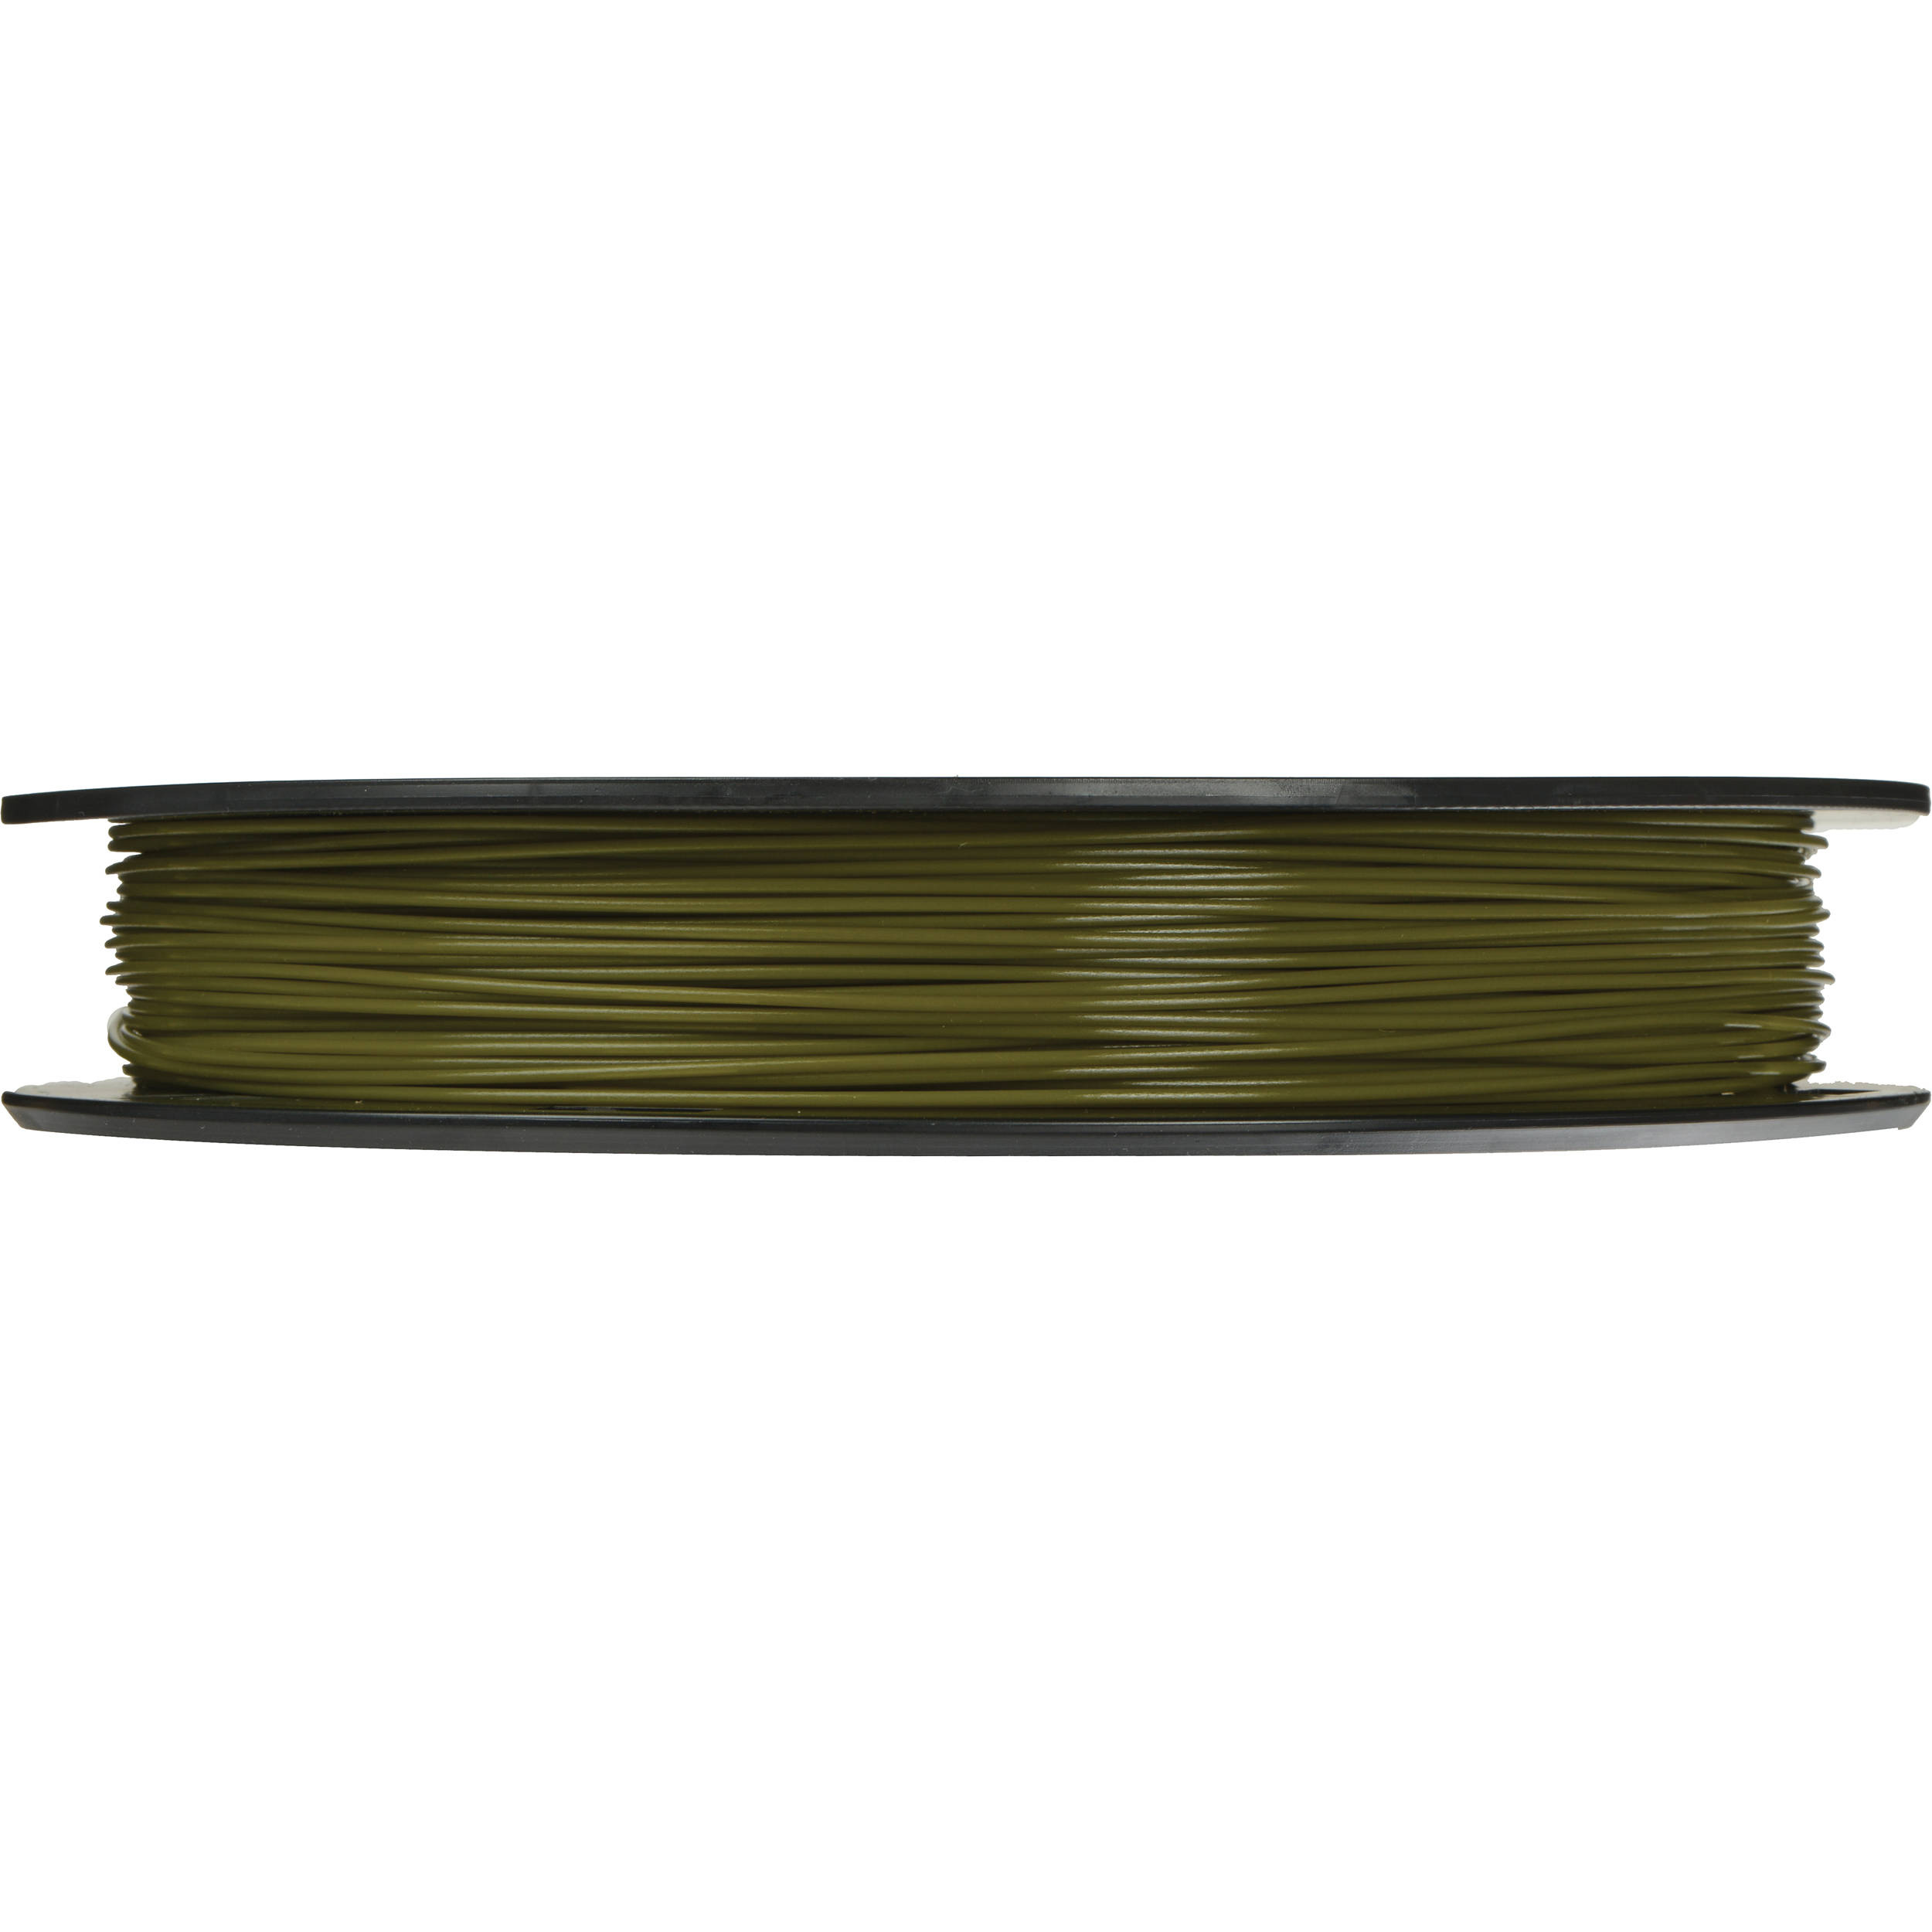 MakerBot 1.75mm PLA Filament (Large Spool, 2 lb, Army Green)